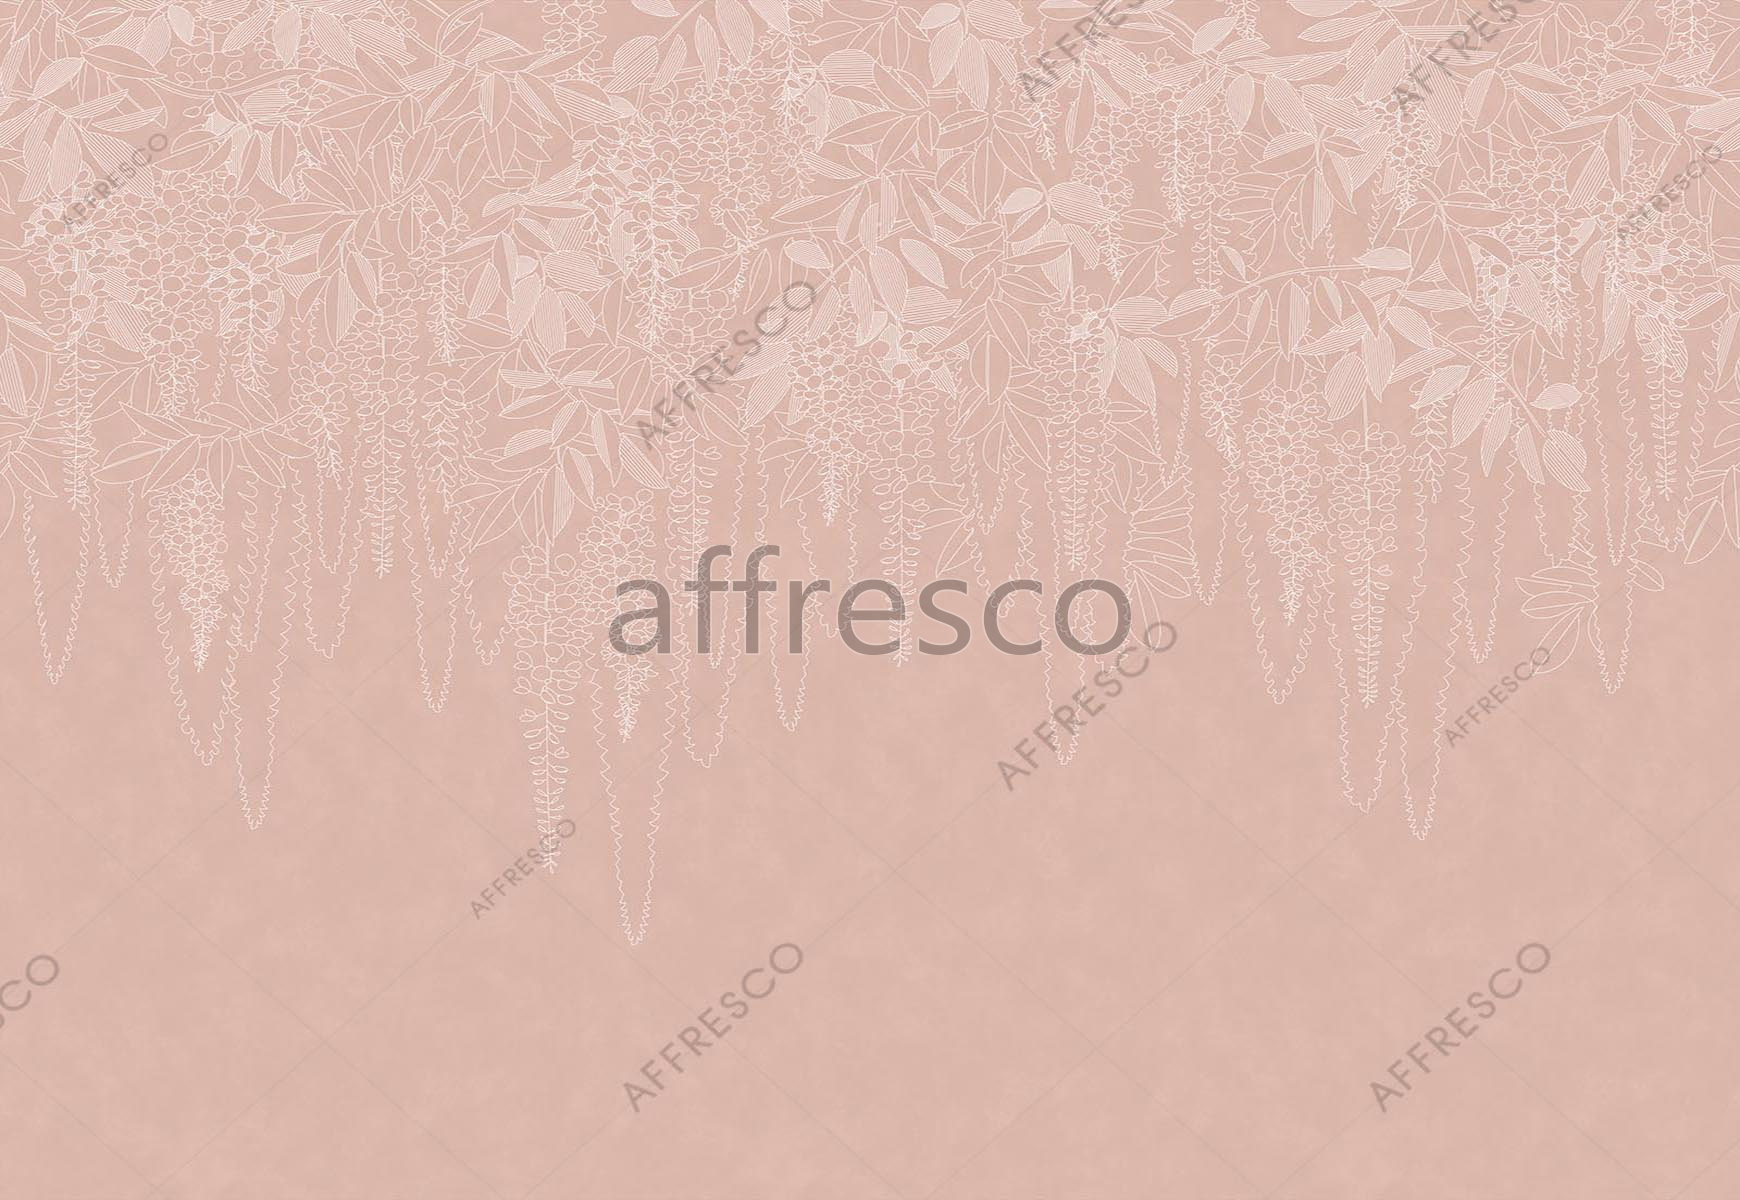 ID139202 | Forest | floral design graphics | Affresco Factory